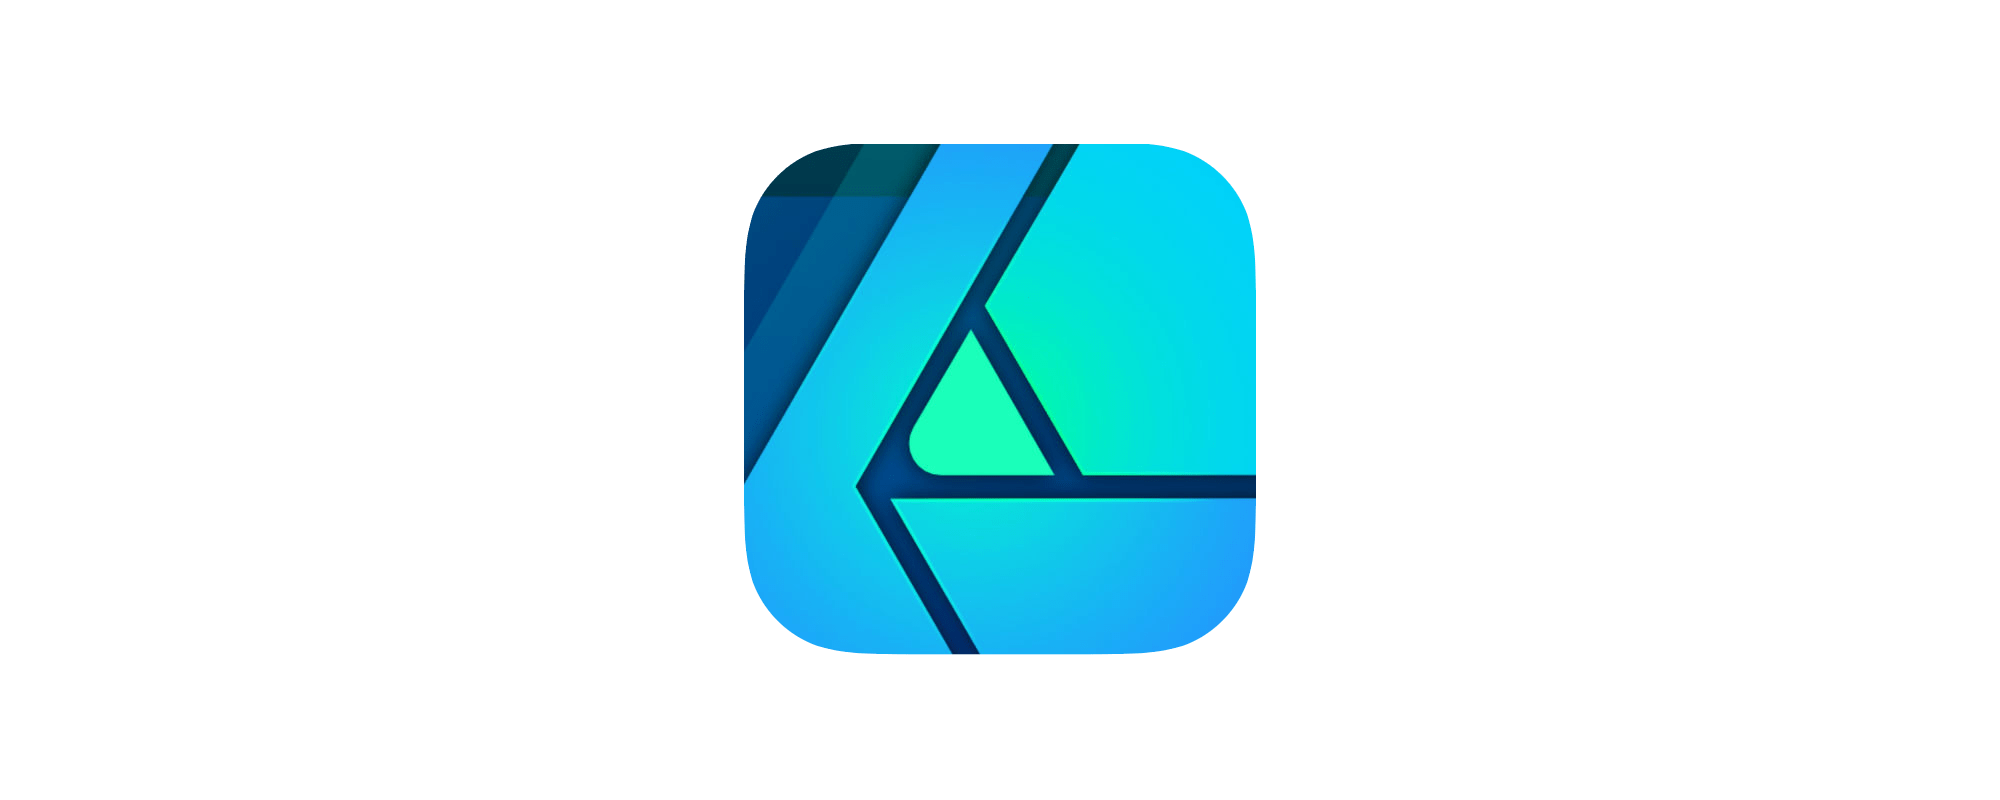 affinity designer ipad logo